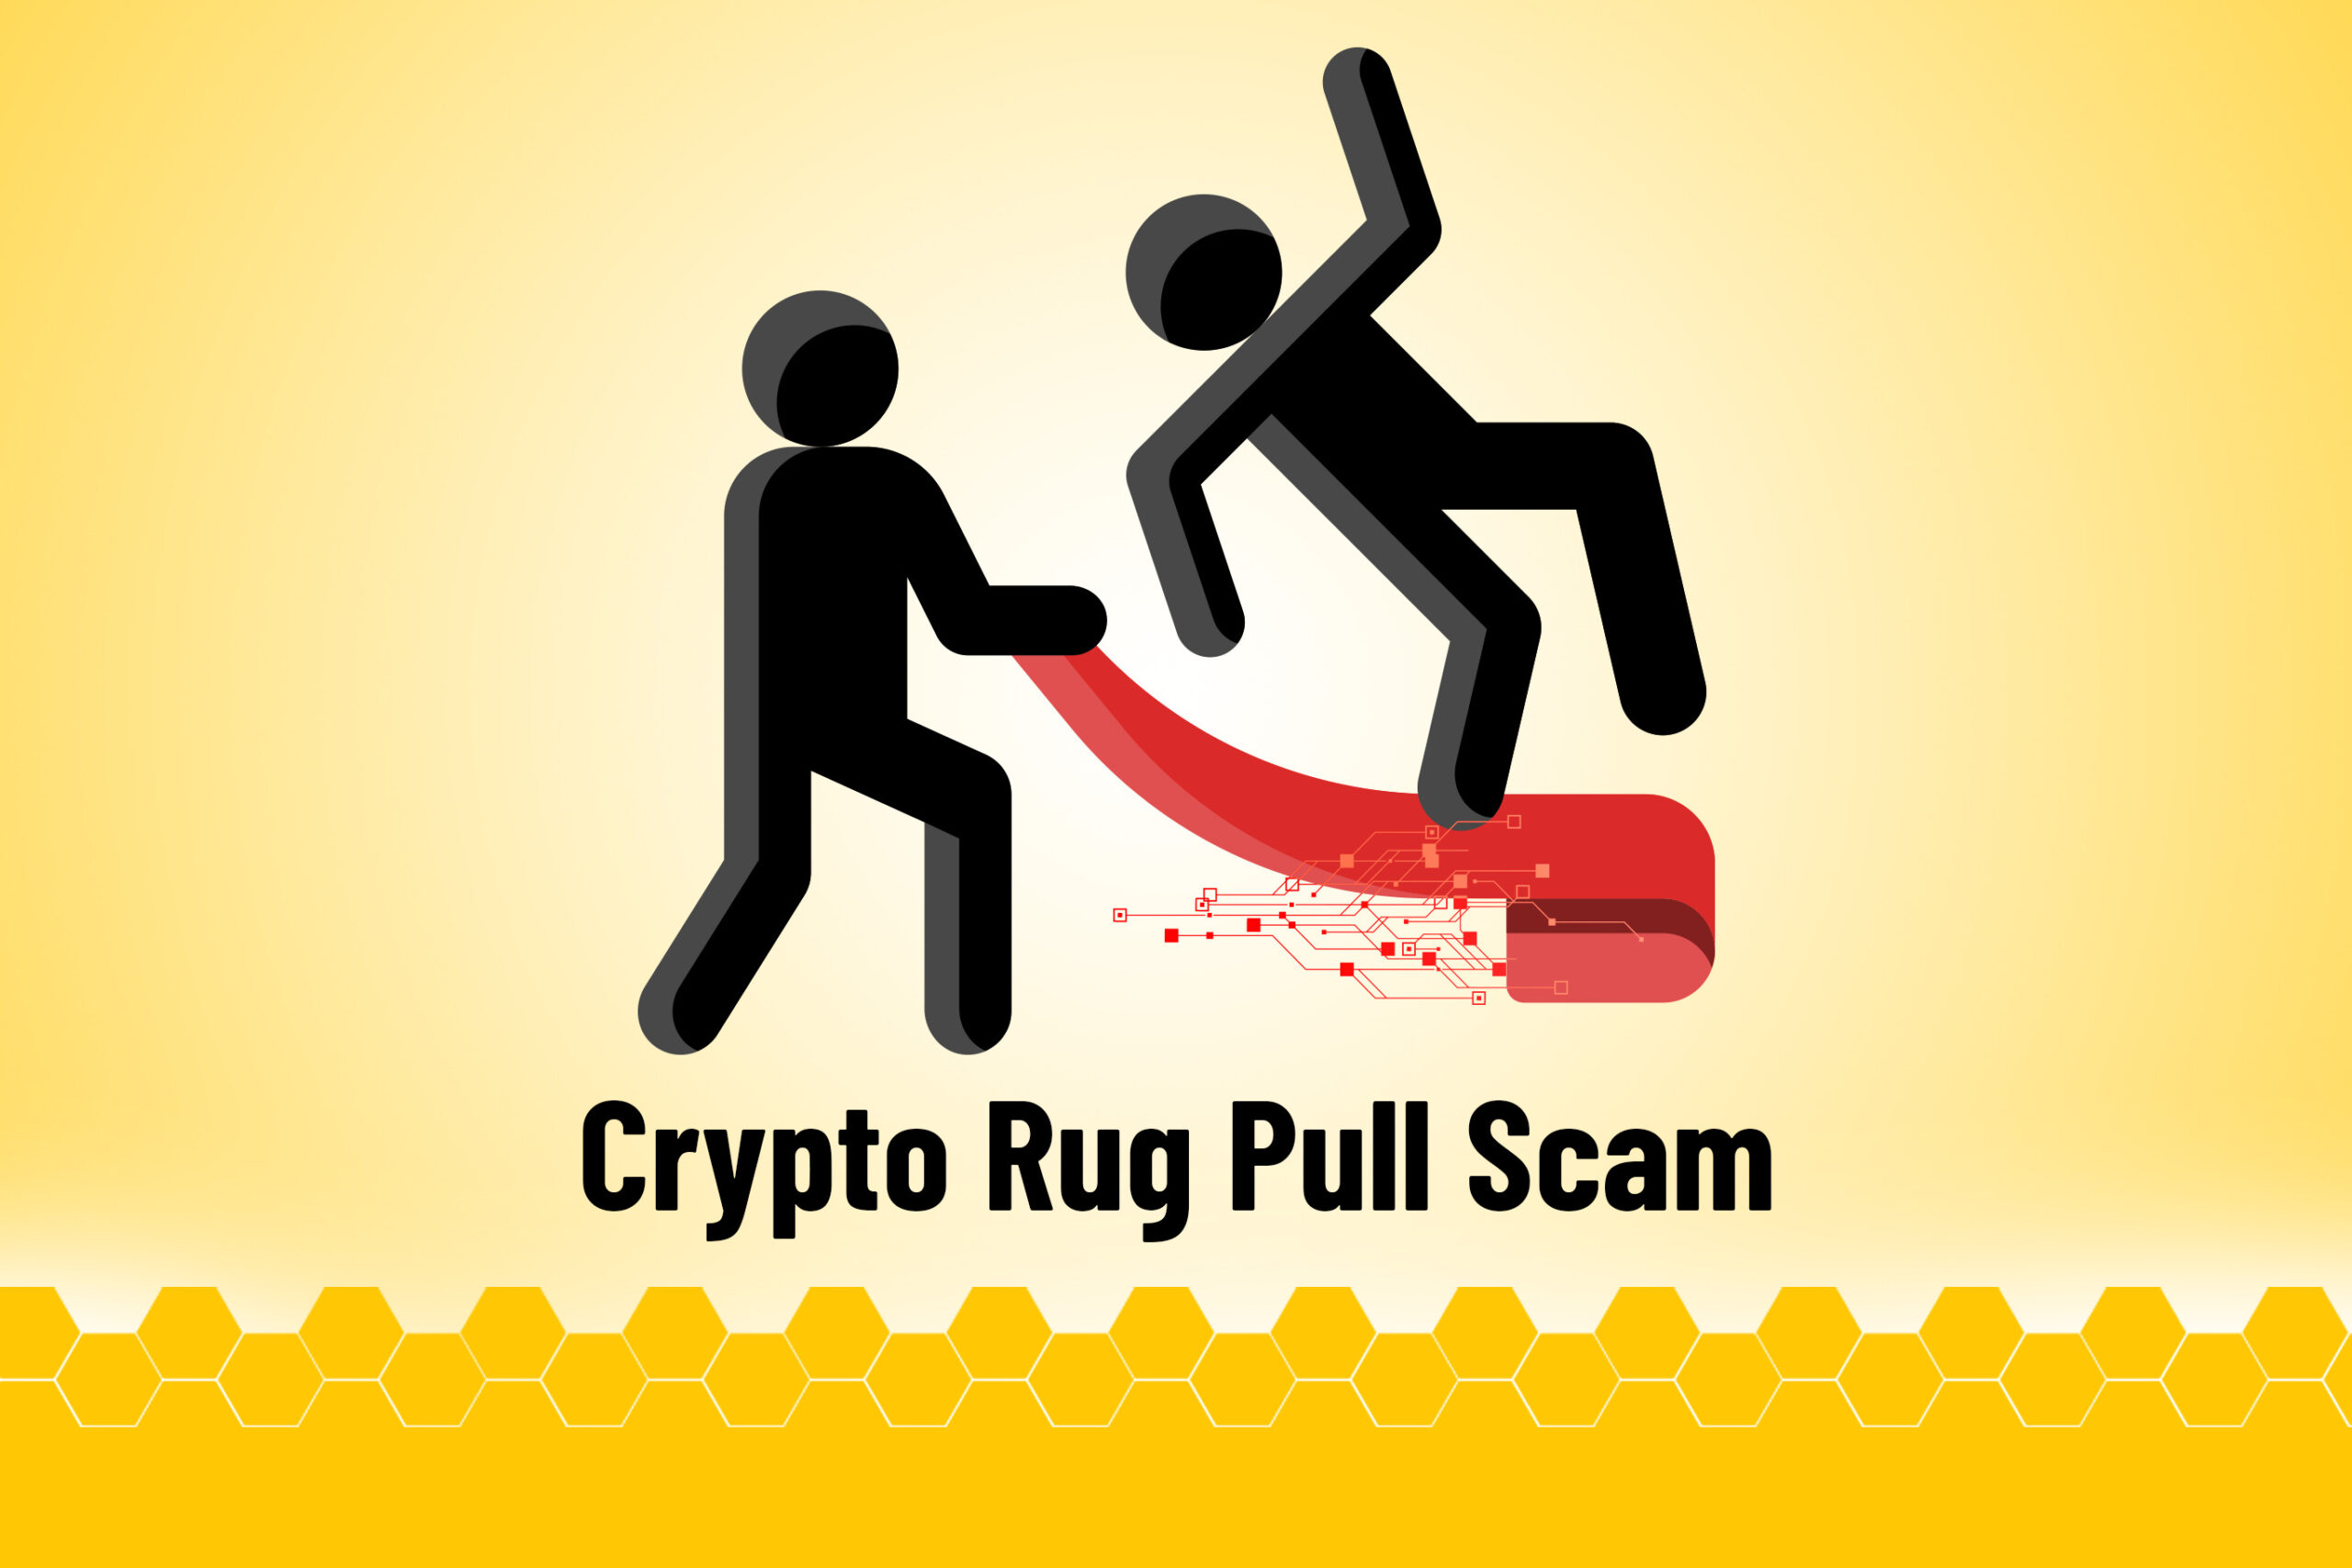 Rug pull crypto